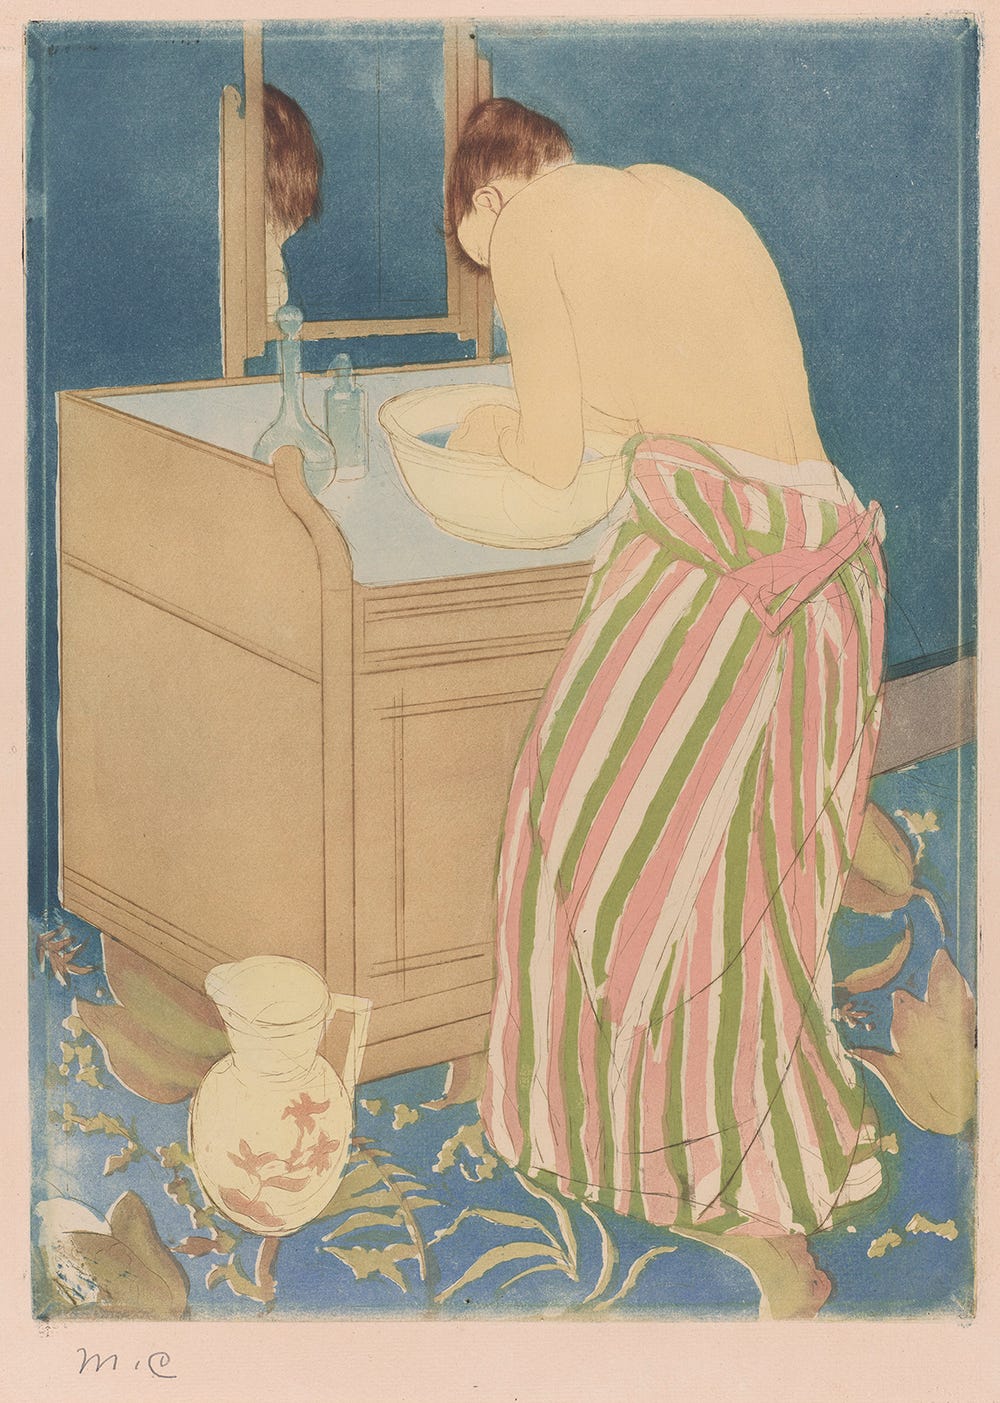 Aquatint of a women bathing by Mary Cassatt